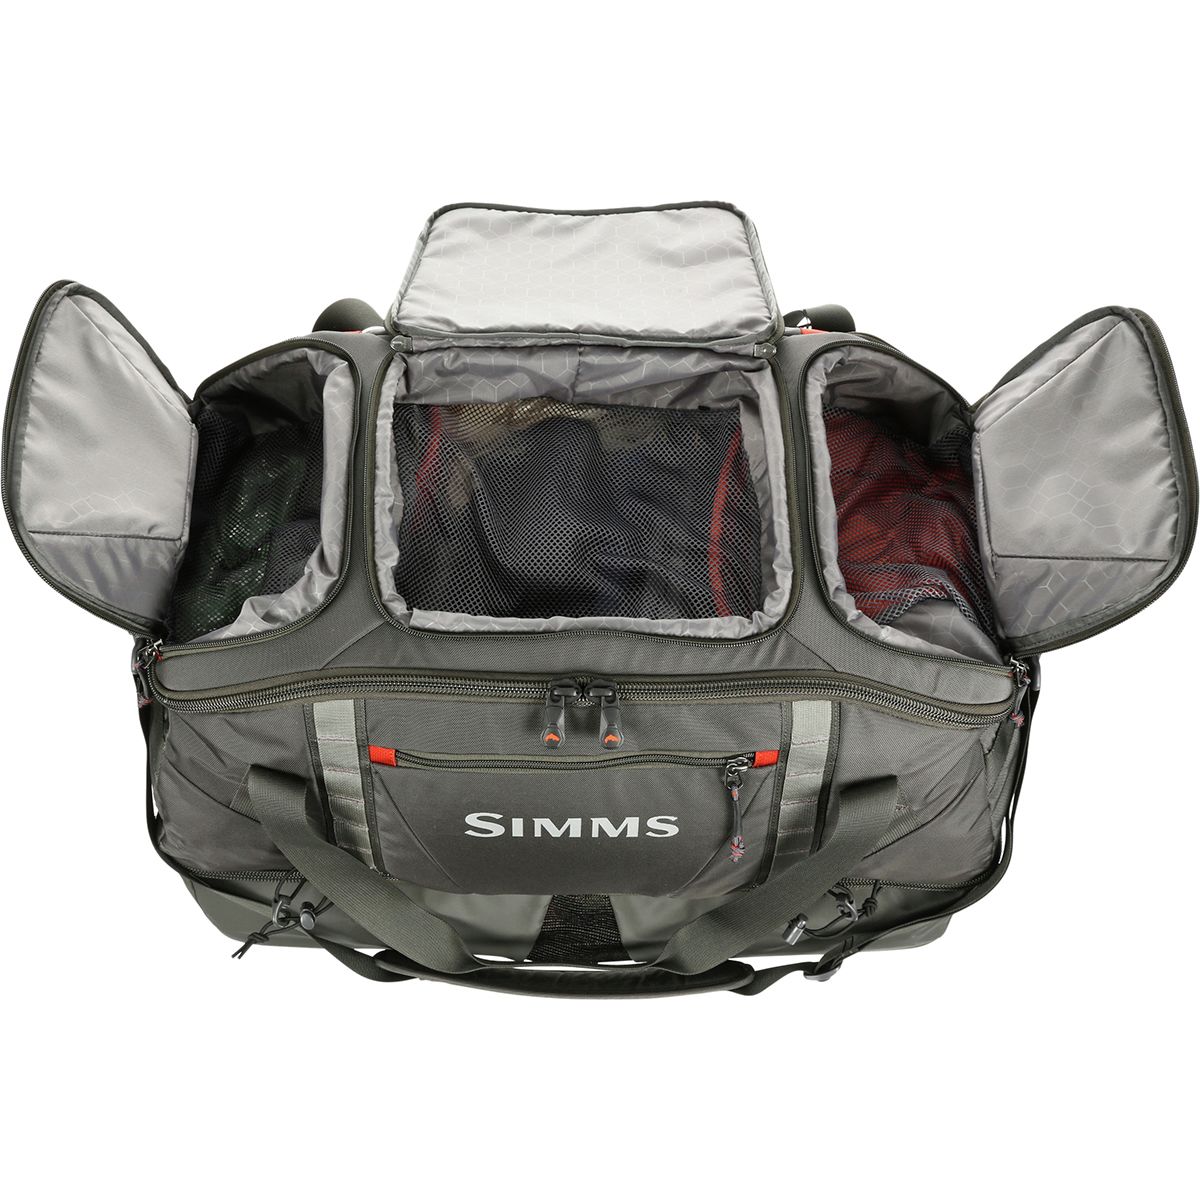 Simms Essential 90L Gear Bag - Travel